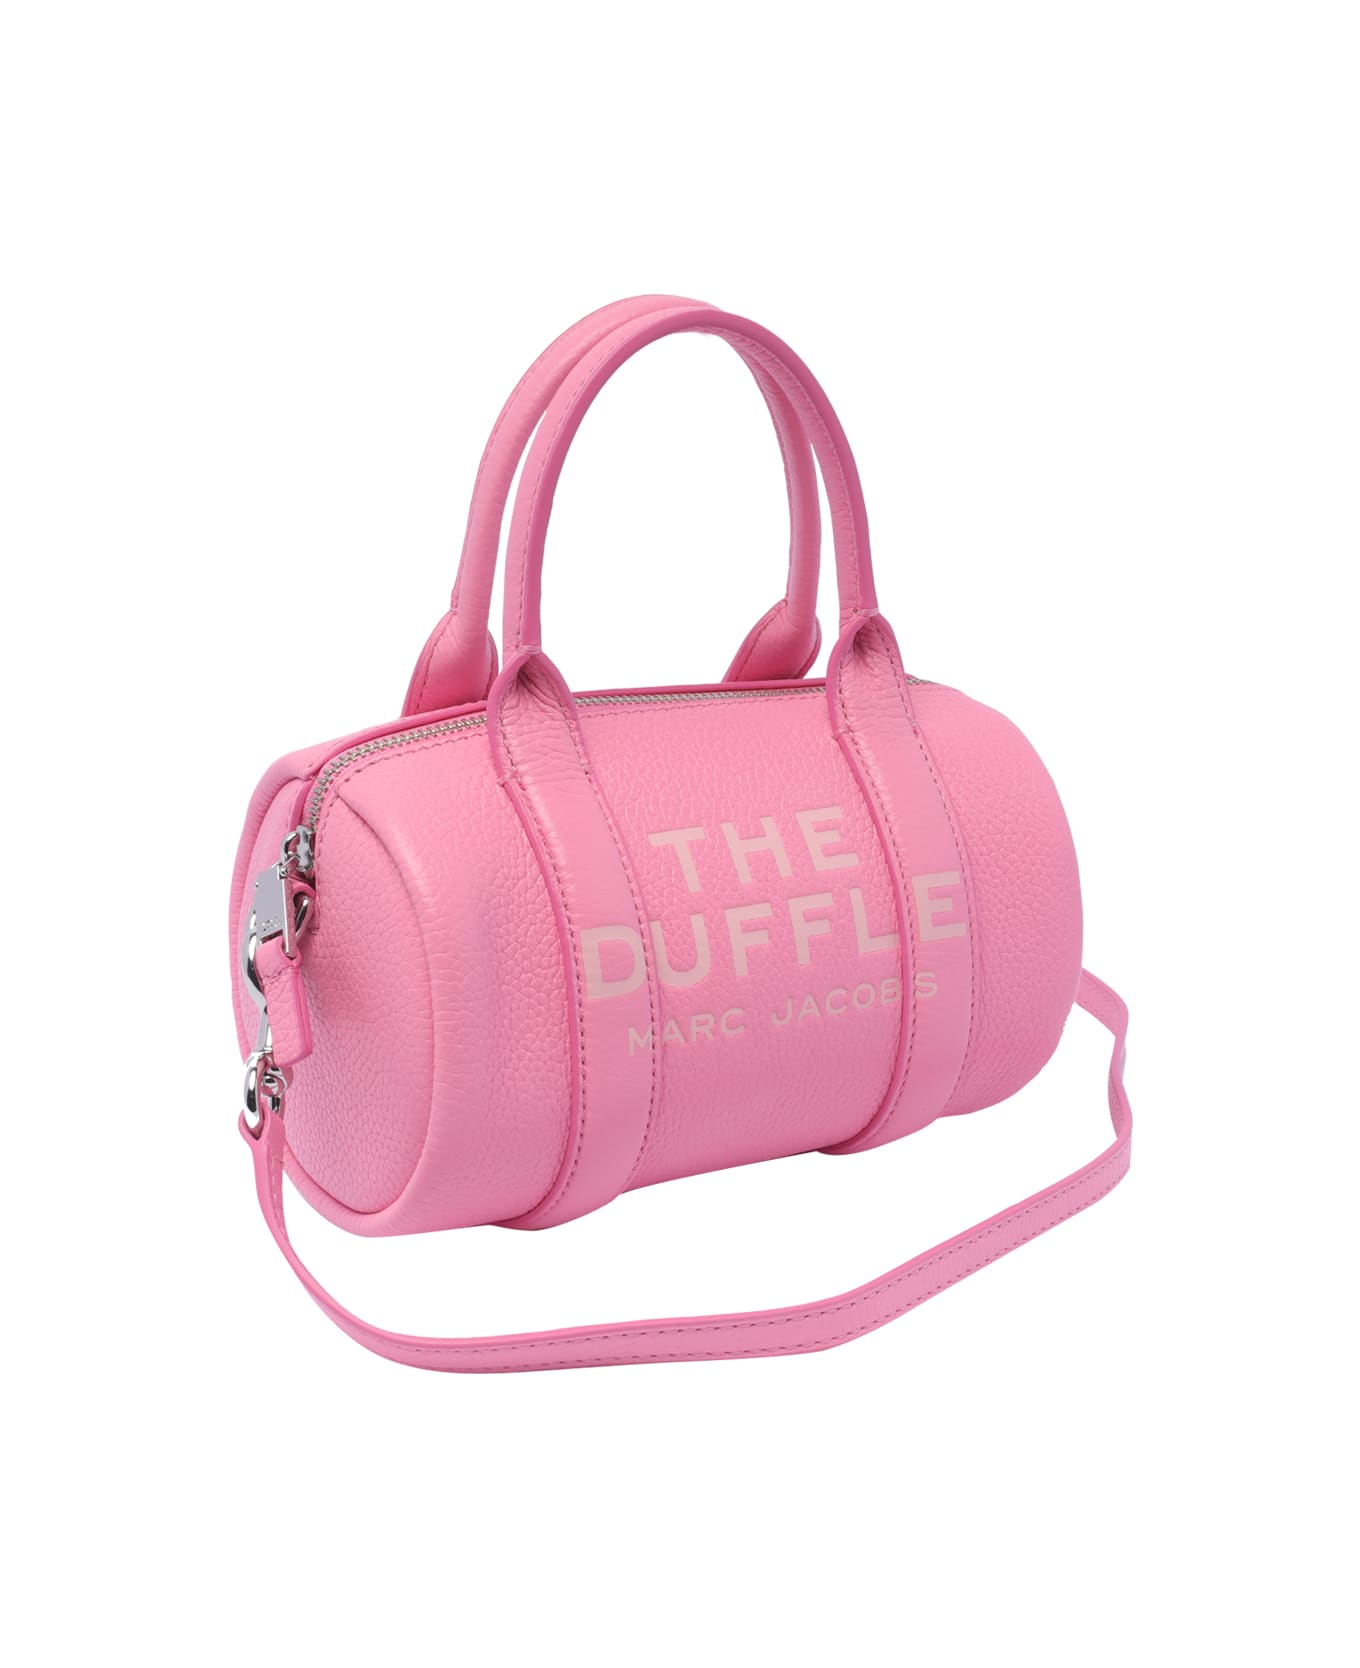 Marc Jacobs The Mini Duffle Bag - Petal pink トートバッグ